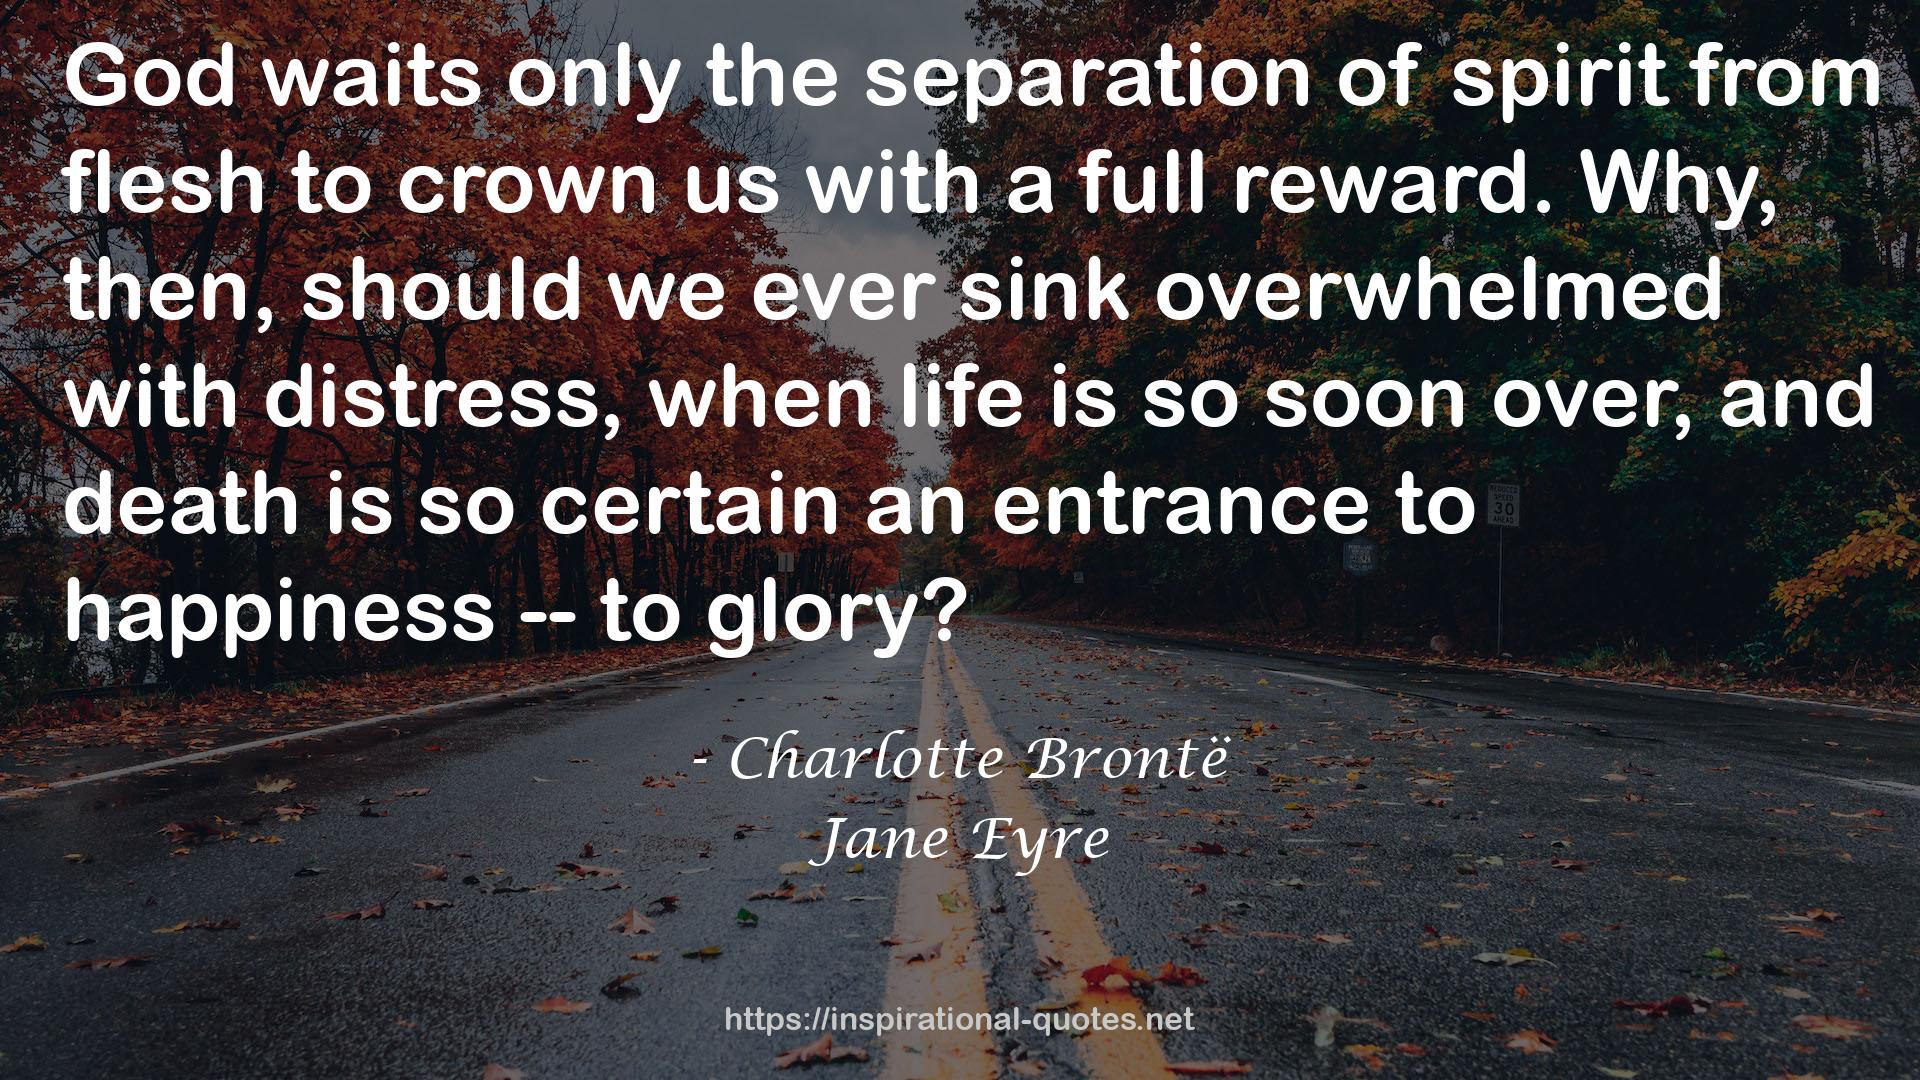 Jane Eyre QUOTES